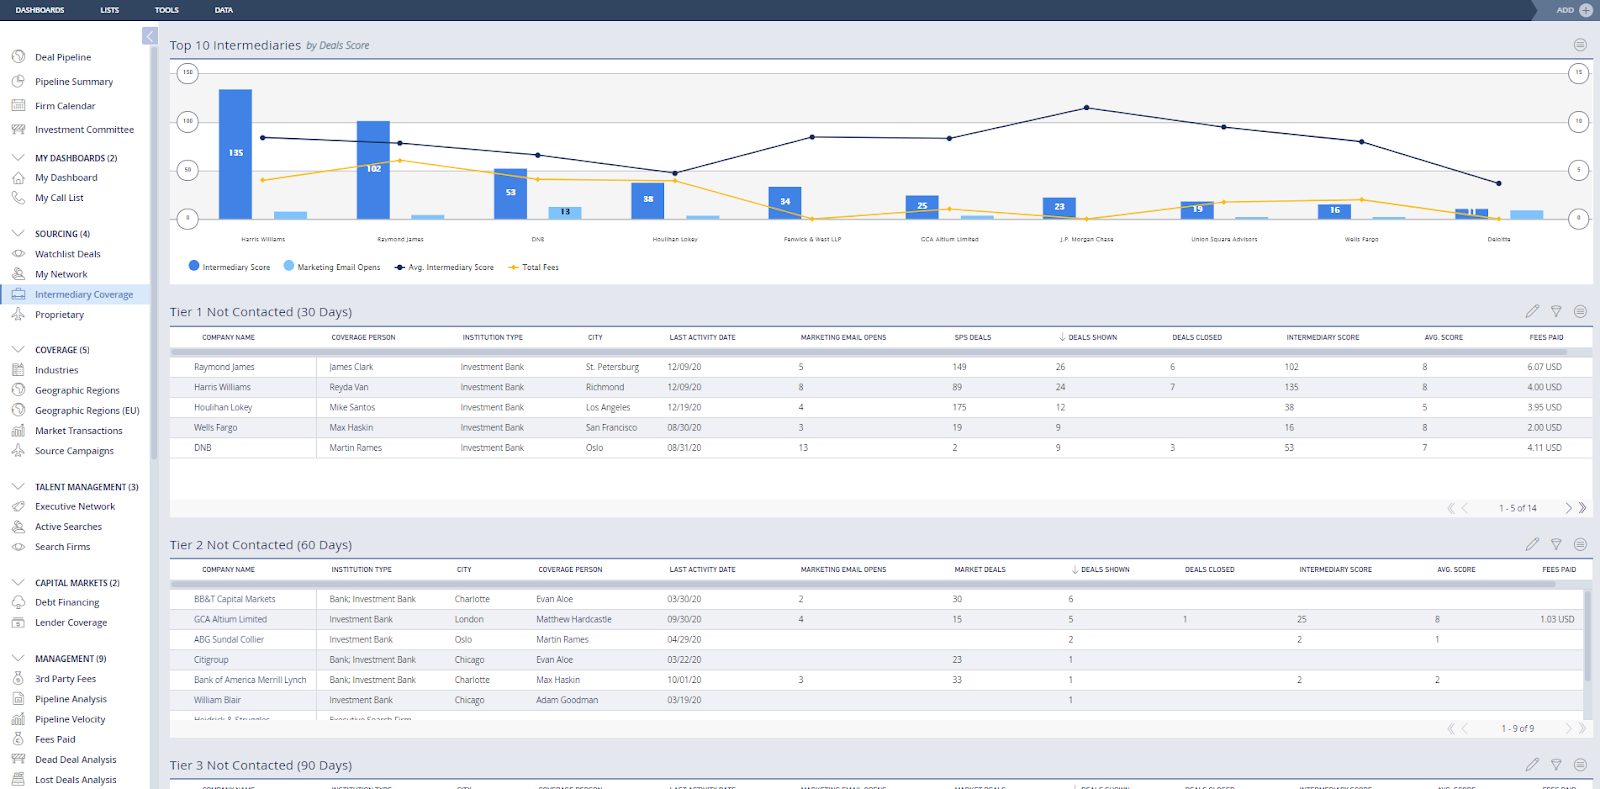 DataCortex Private equity Analytics Tools to View Intermediaries